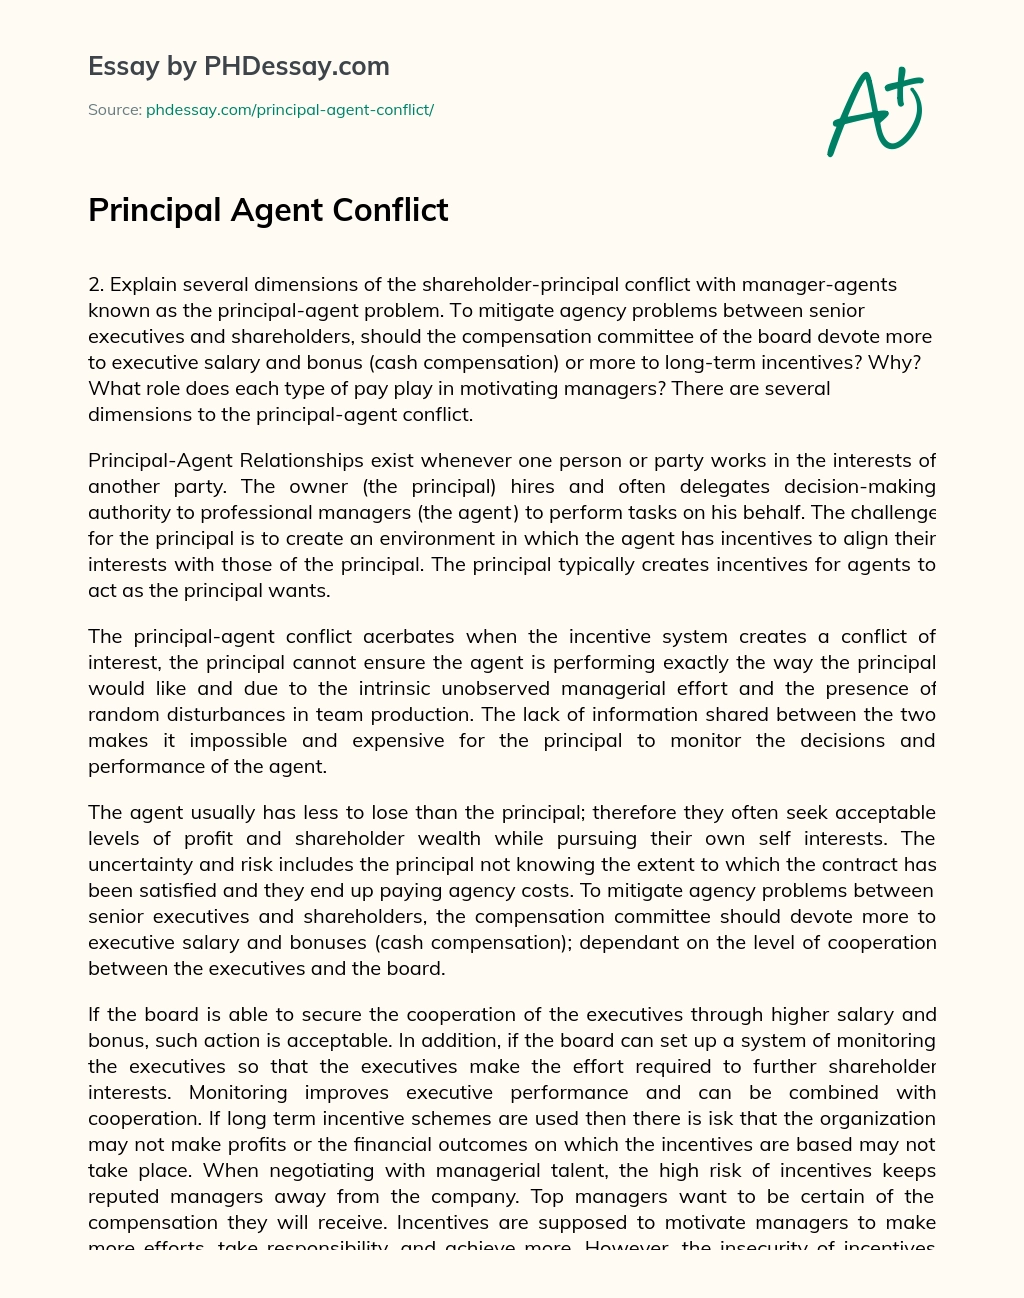 Principal Agent Conflict essay